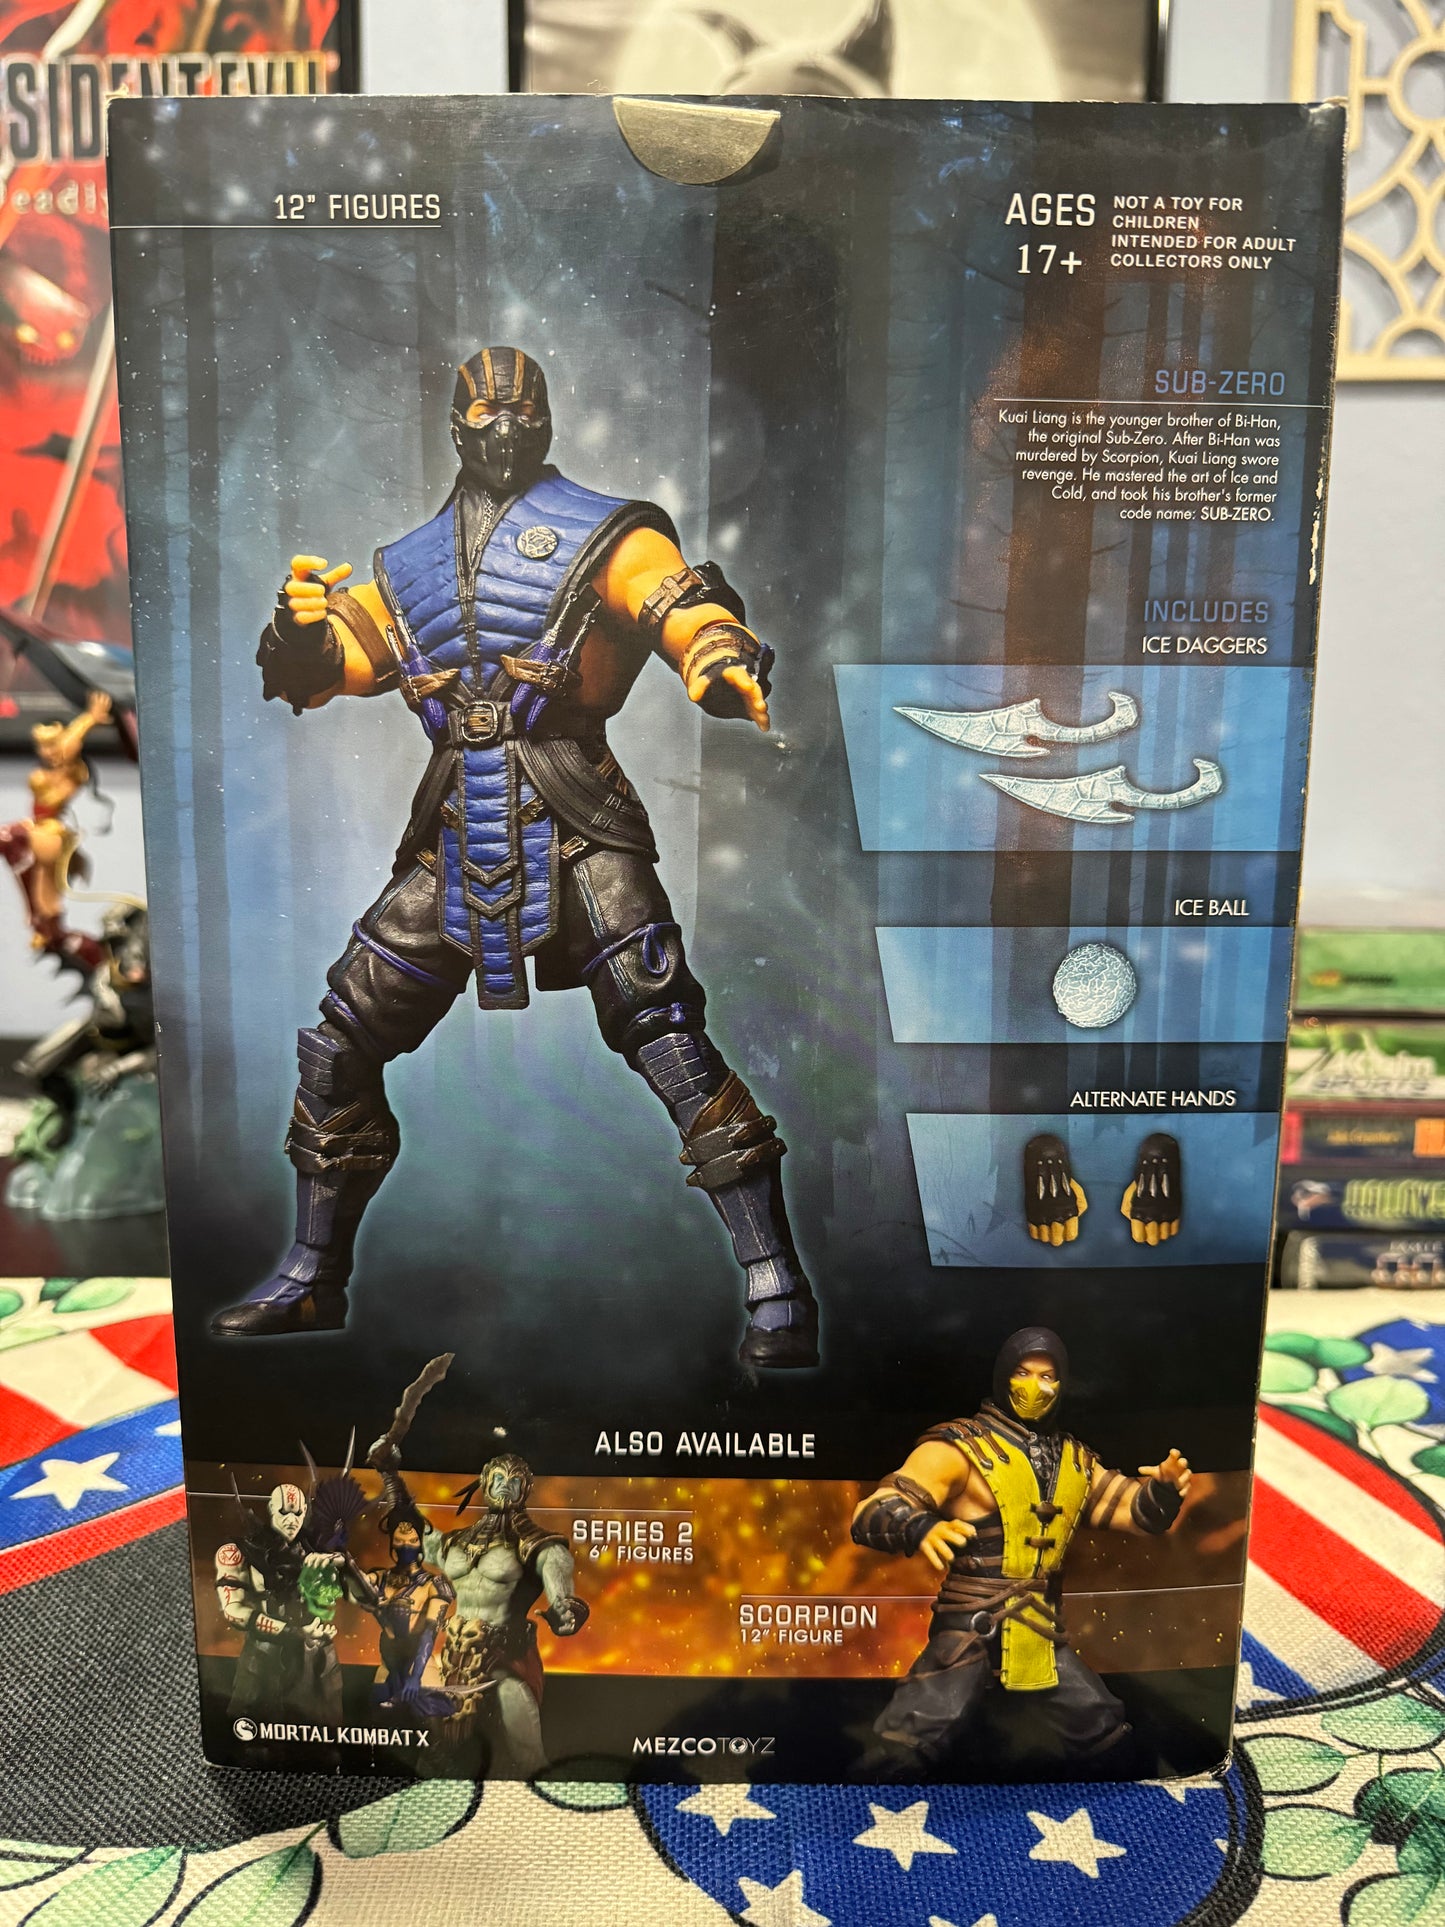 Mezco Mortal Kombat X Sub-Zero 12” Figure